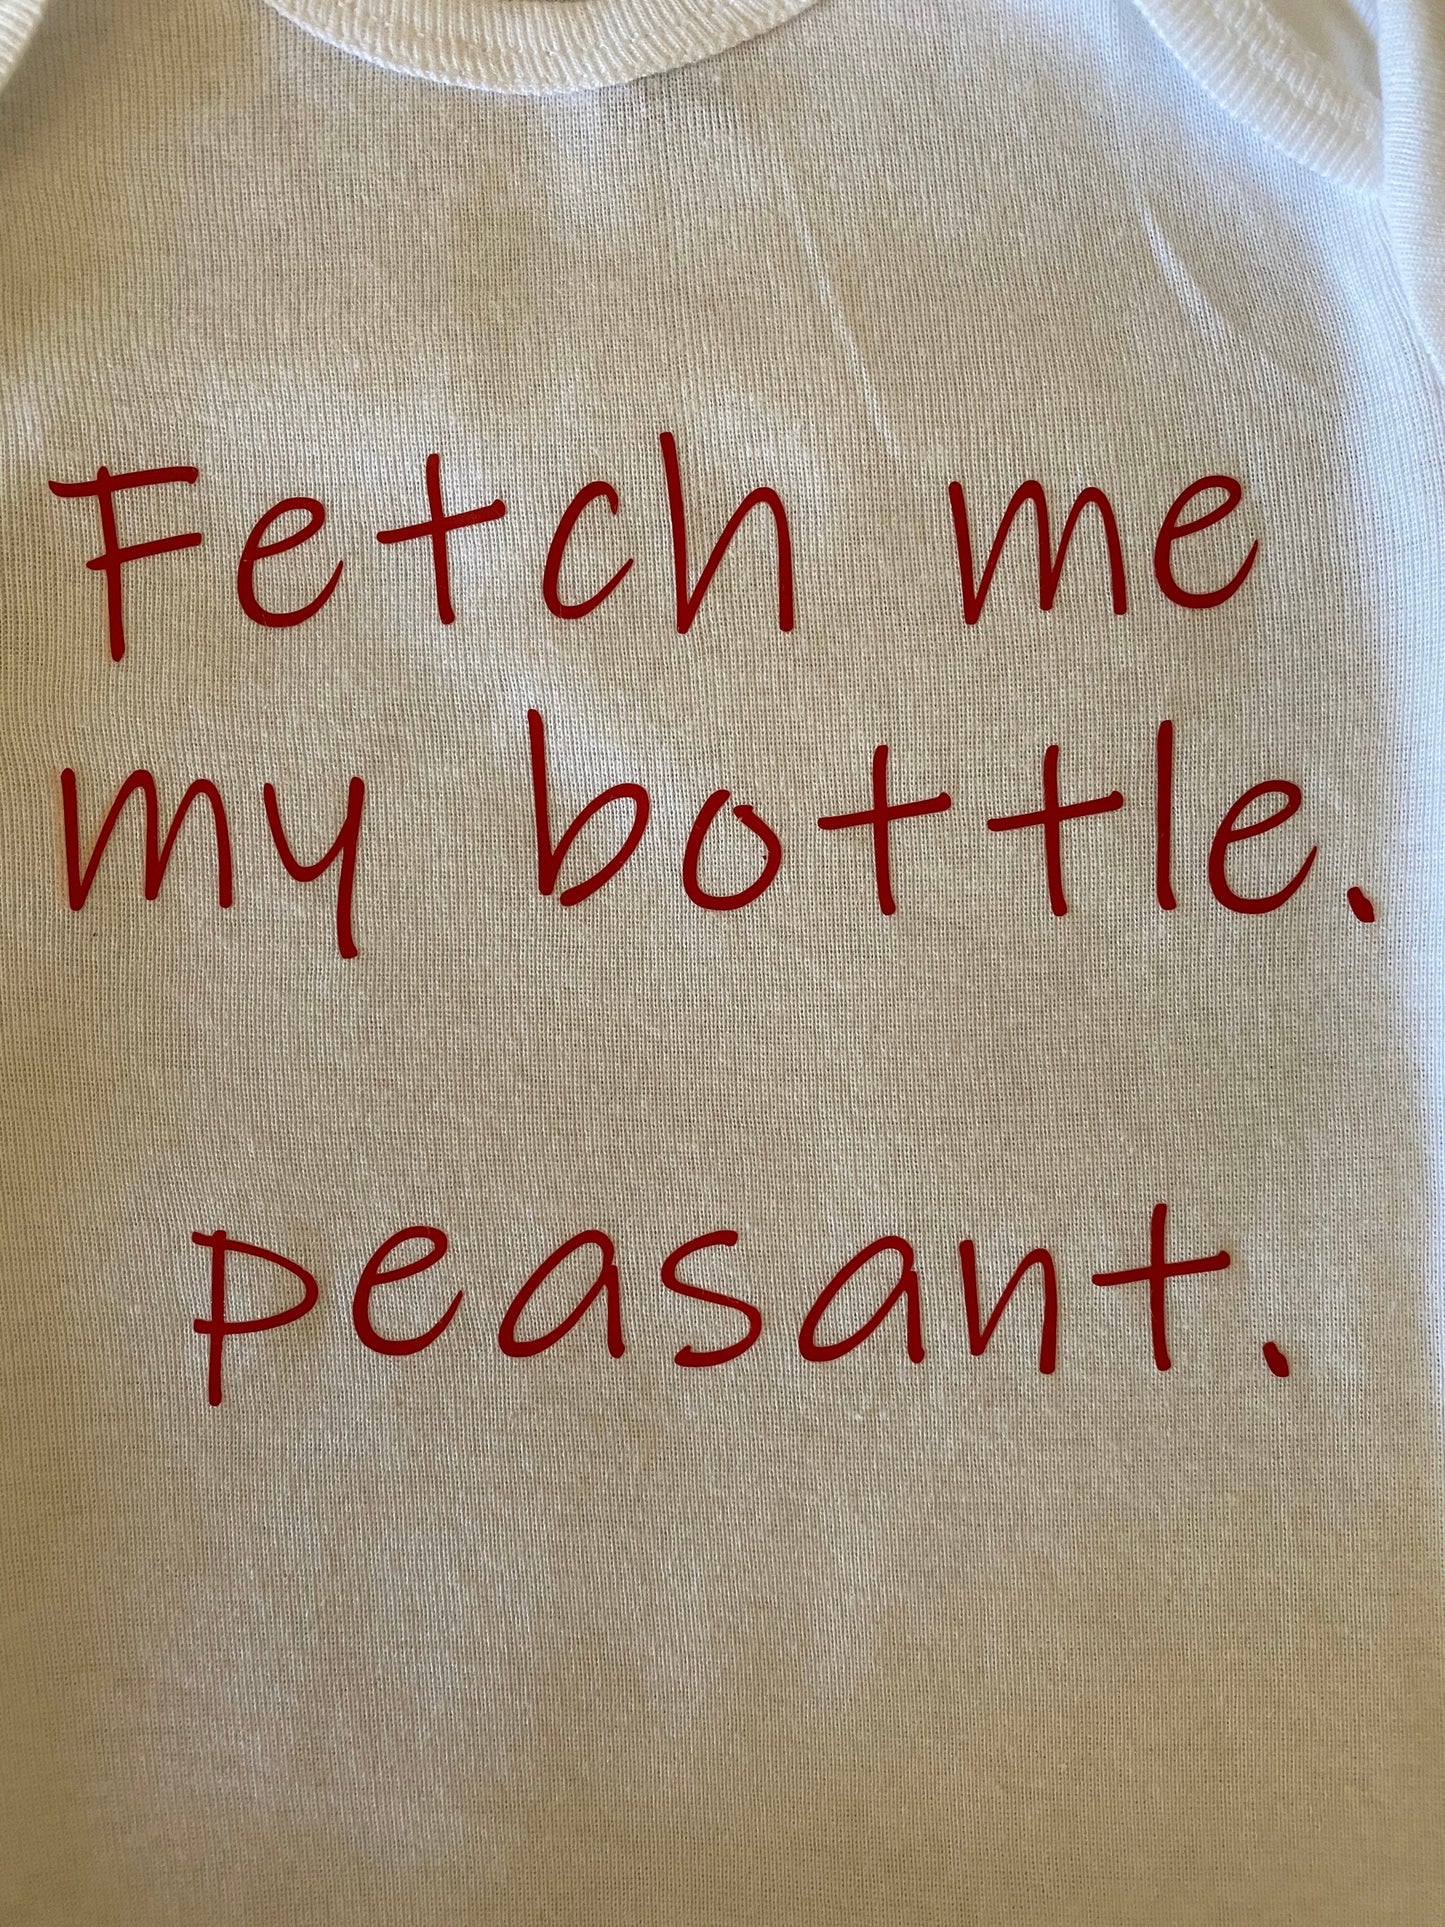 Fetch me my bottle. peasant.